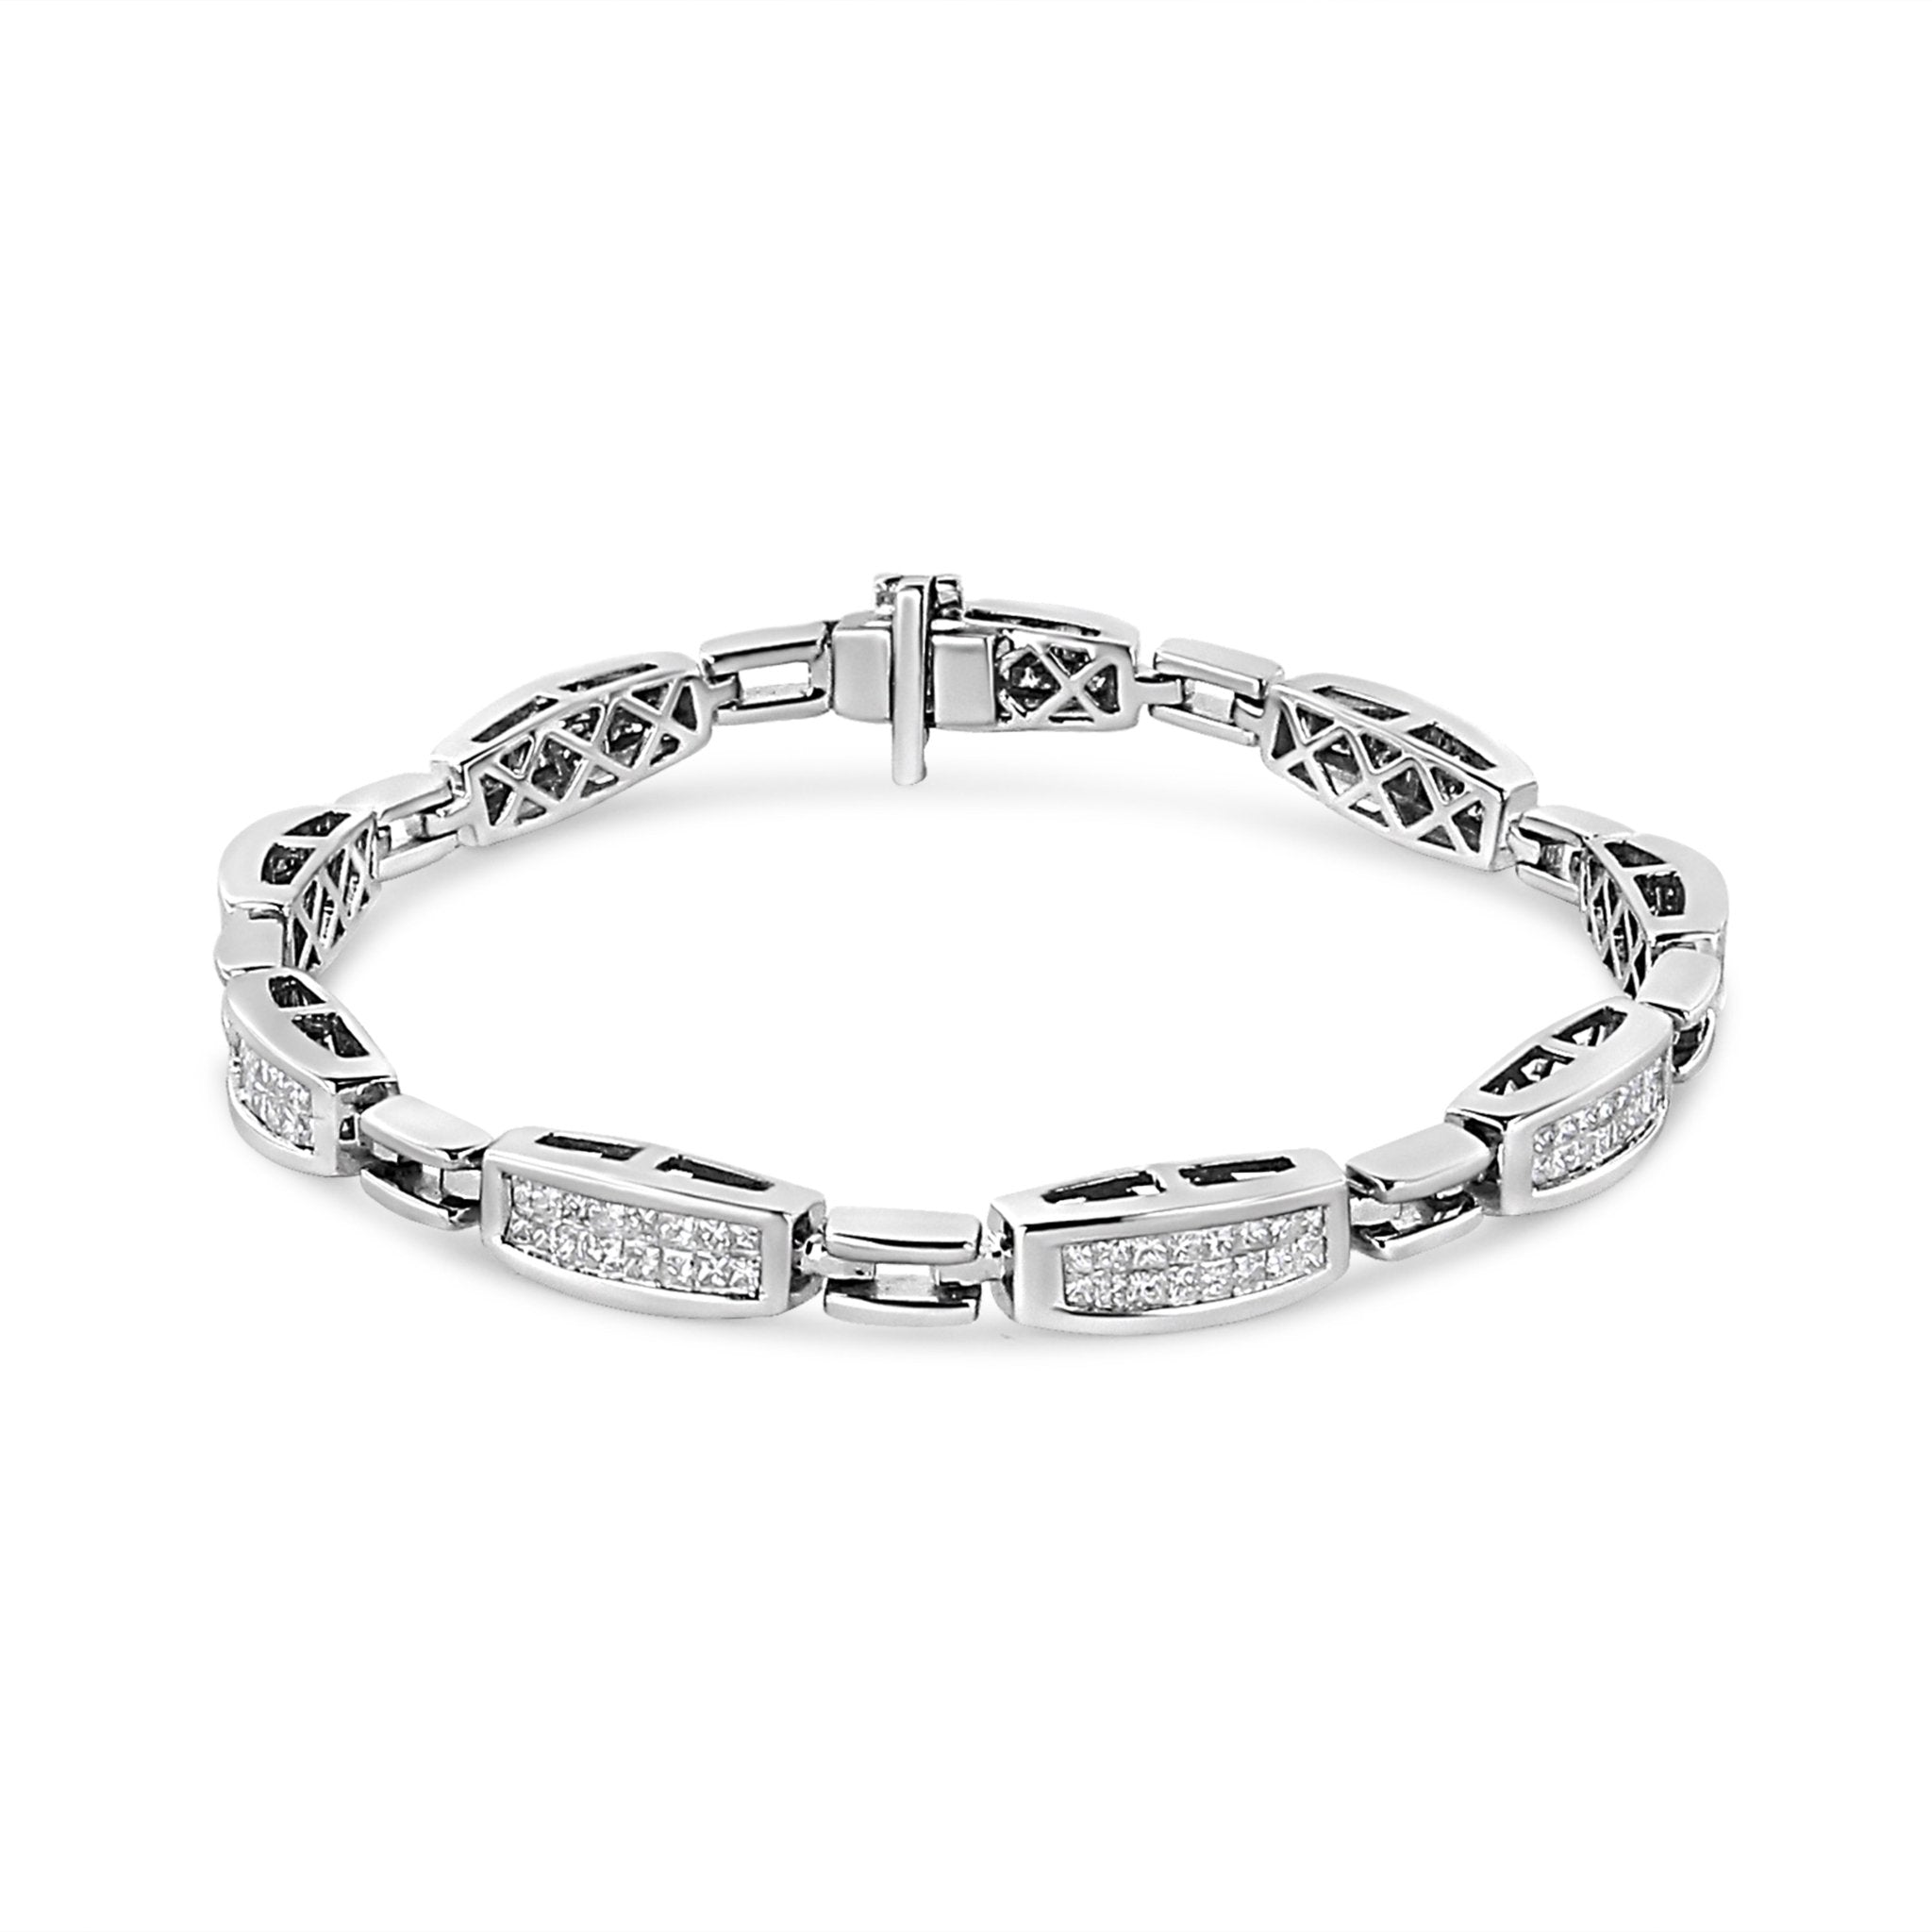 14K White Gold 2.00 Cttw Invisble-Set Princess Diamond Link Bracelet (I1-I2 Clarity, I-J Color) - 7.25